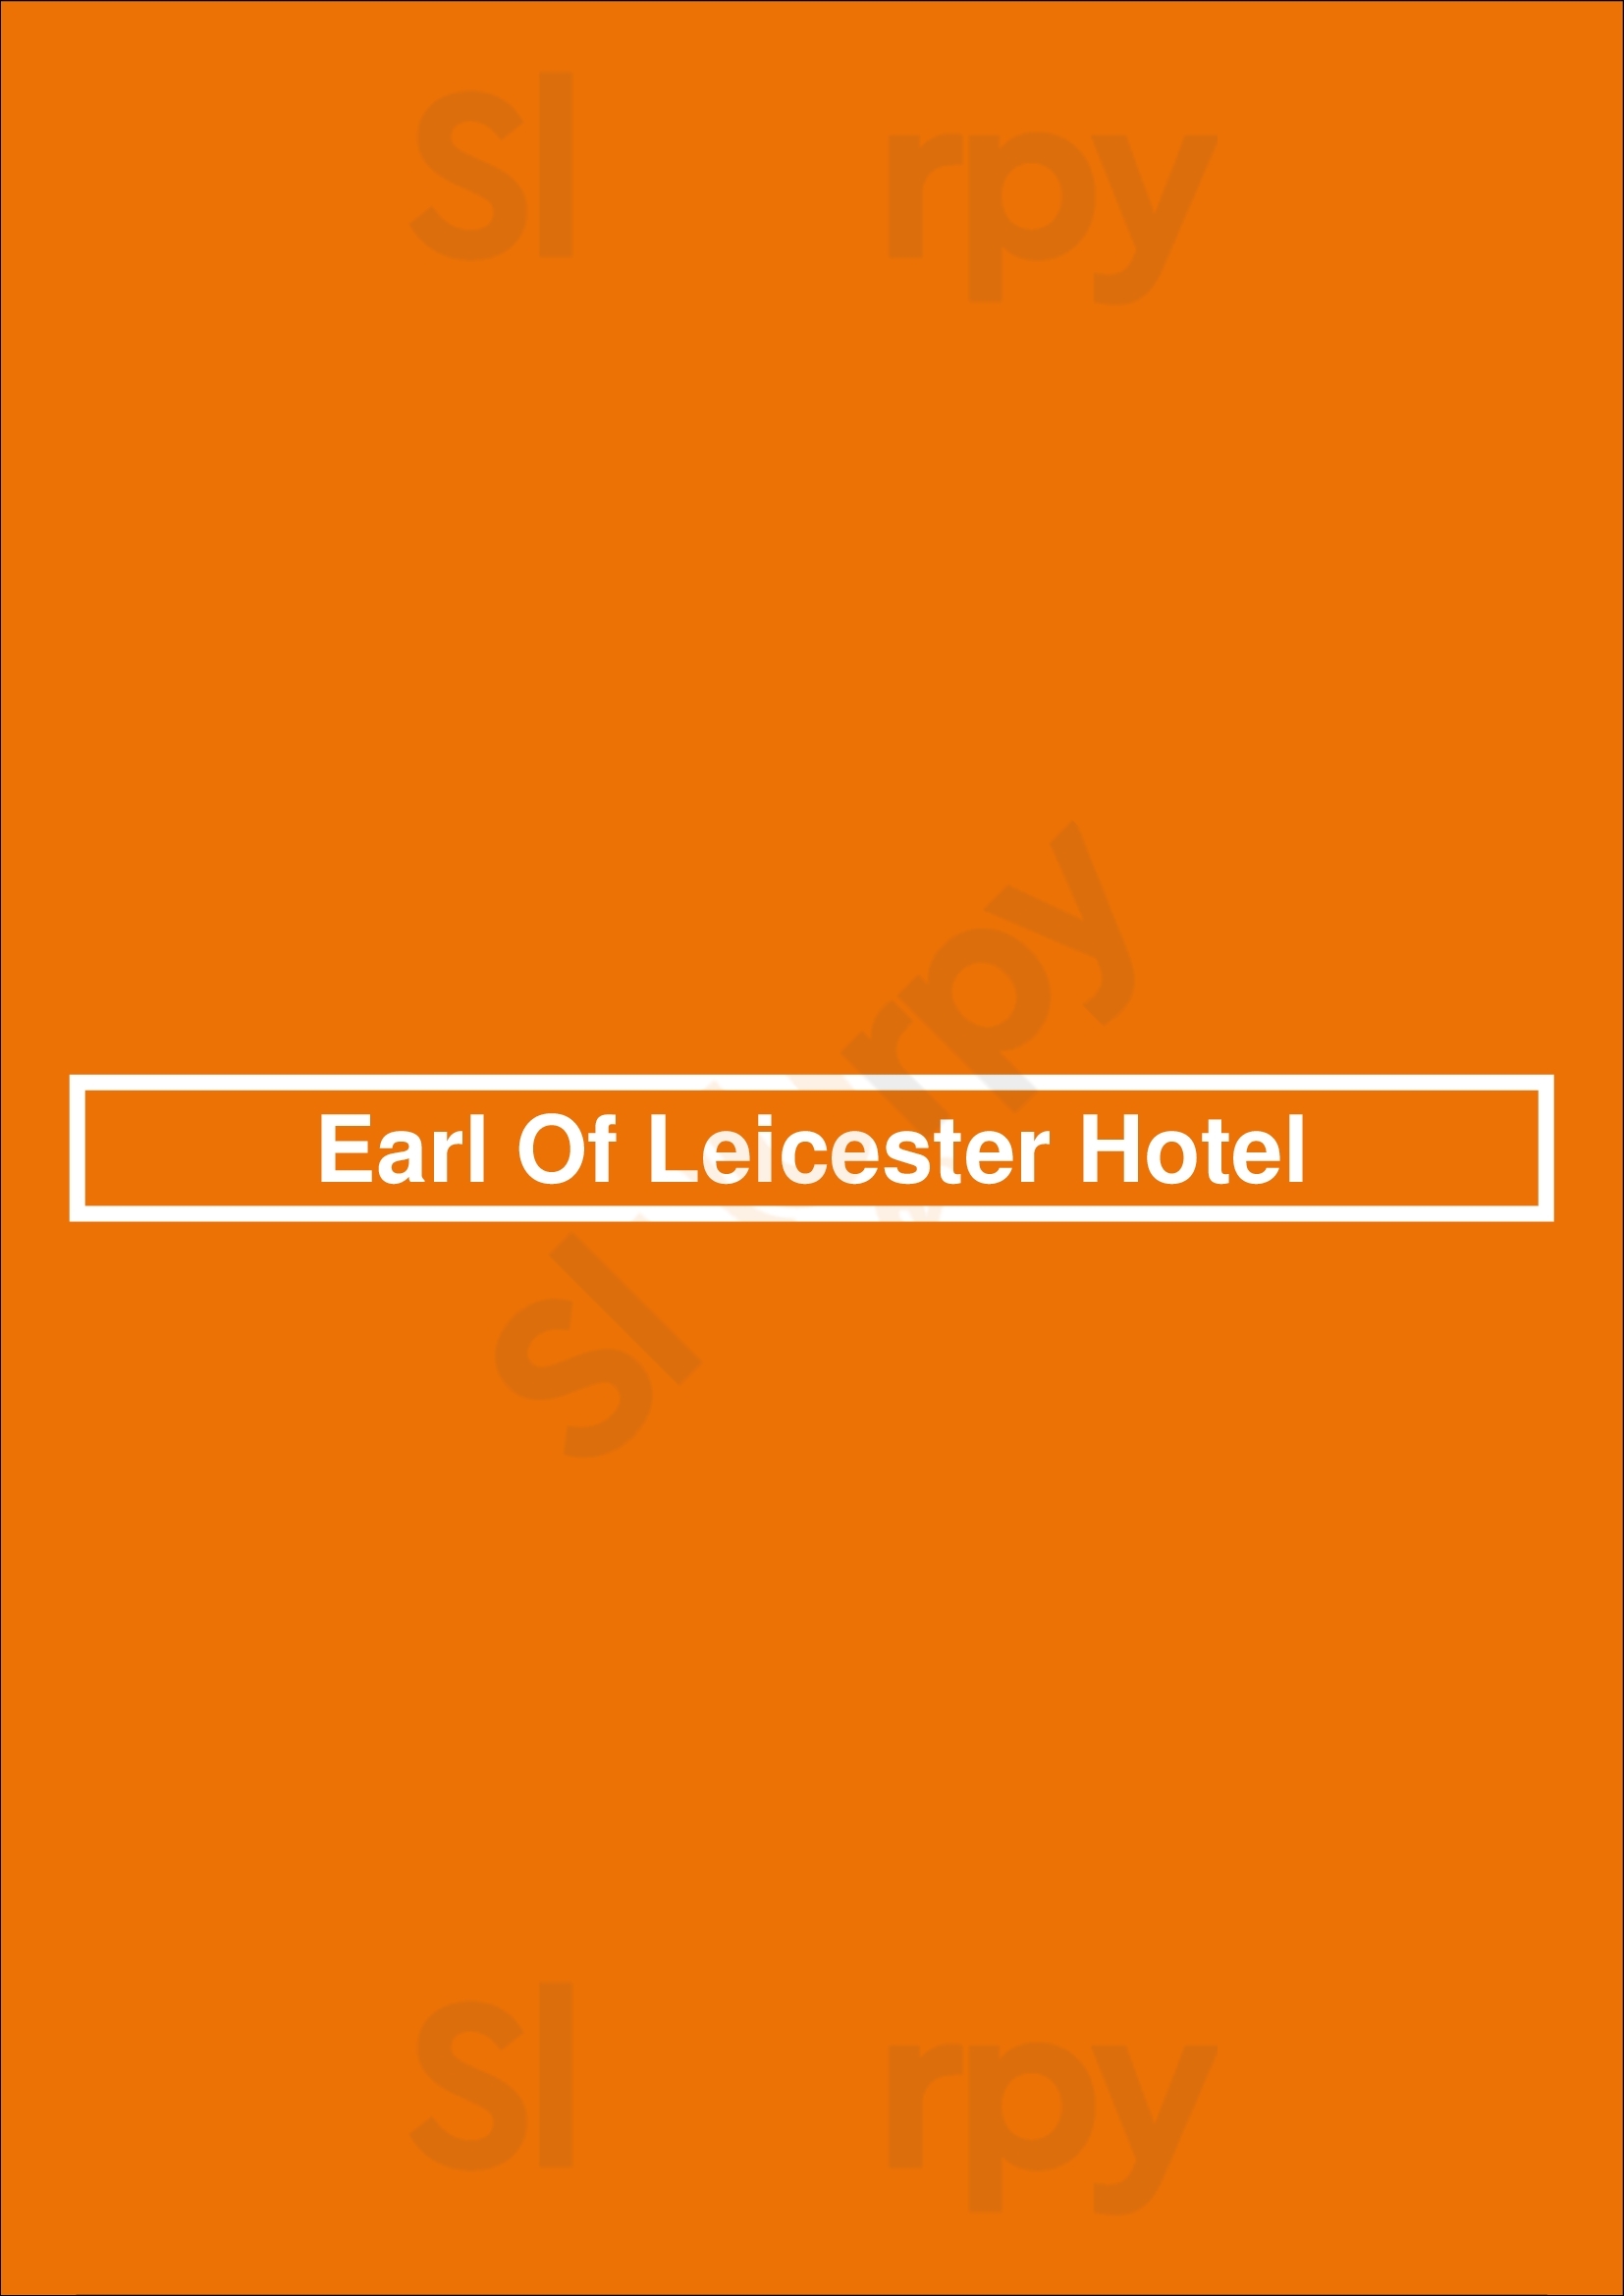 Earl Of Leicester Hotel Parkside Menu - 1